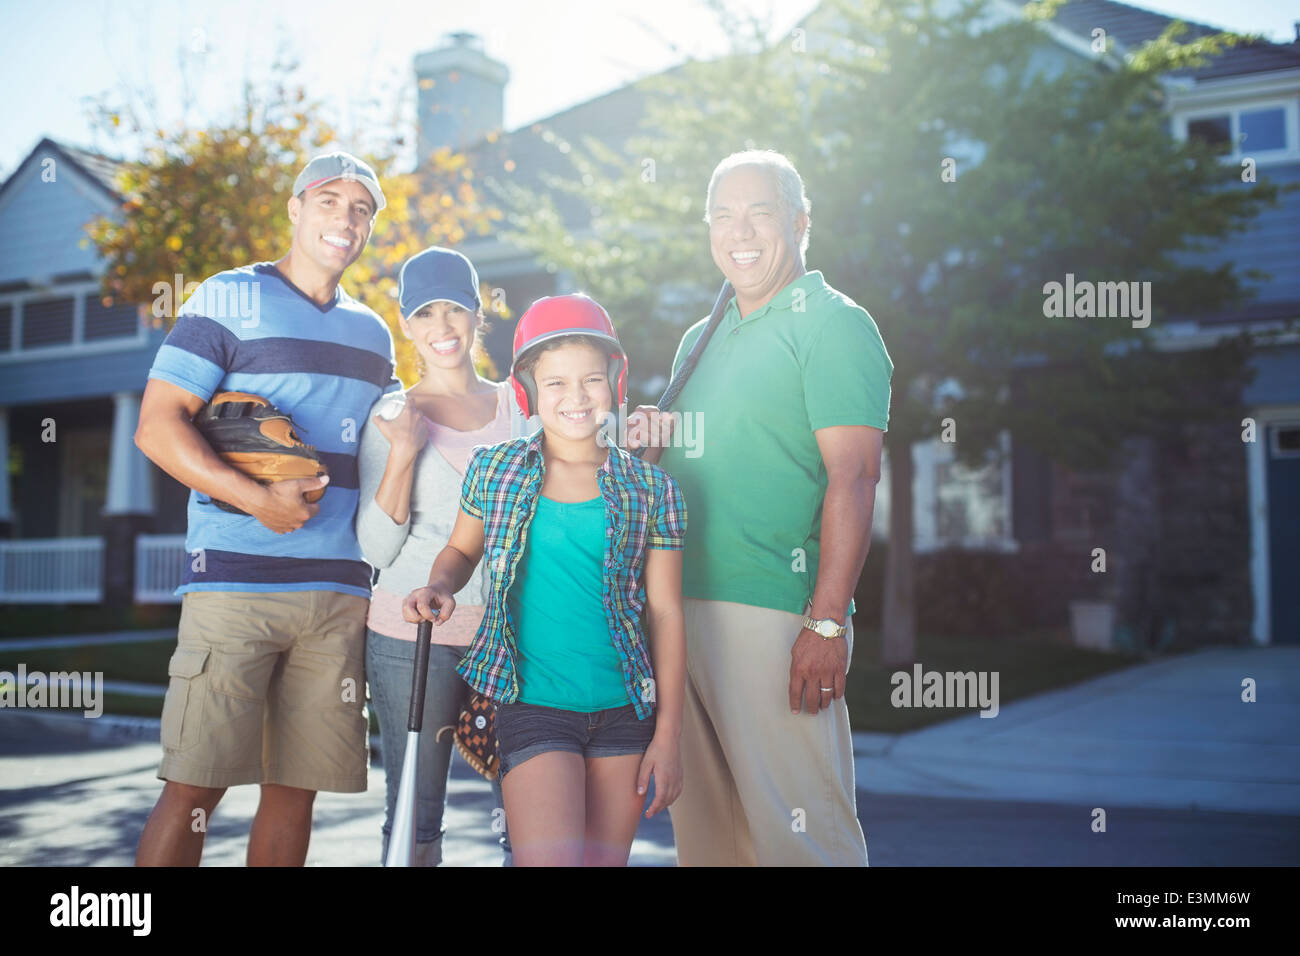 Portrait of smiling multi-generation family with baseball bat dans Street Banque D'Images